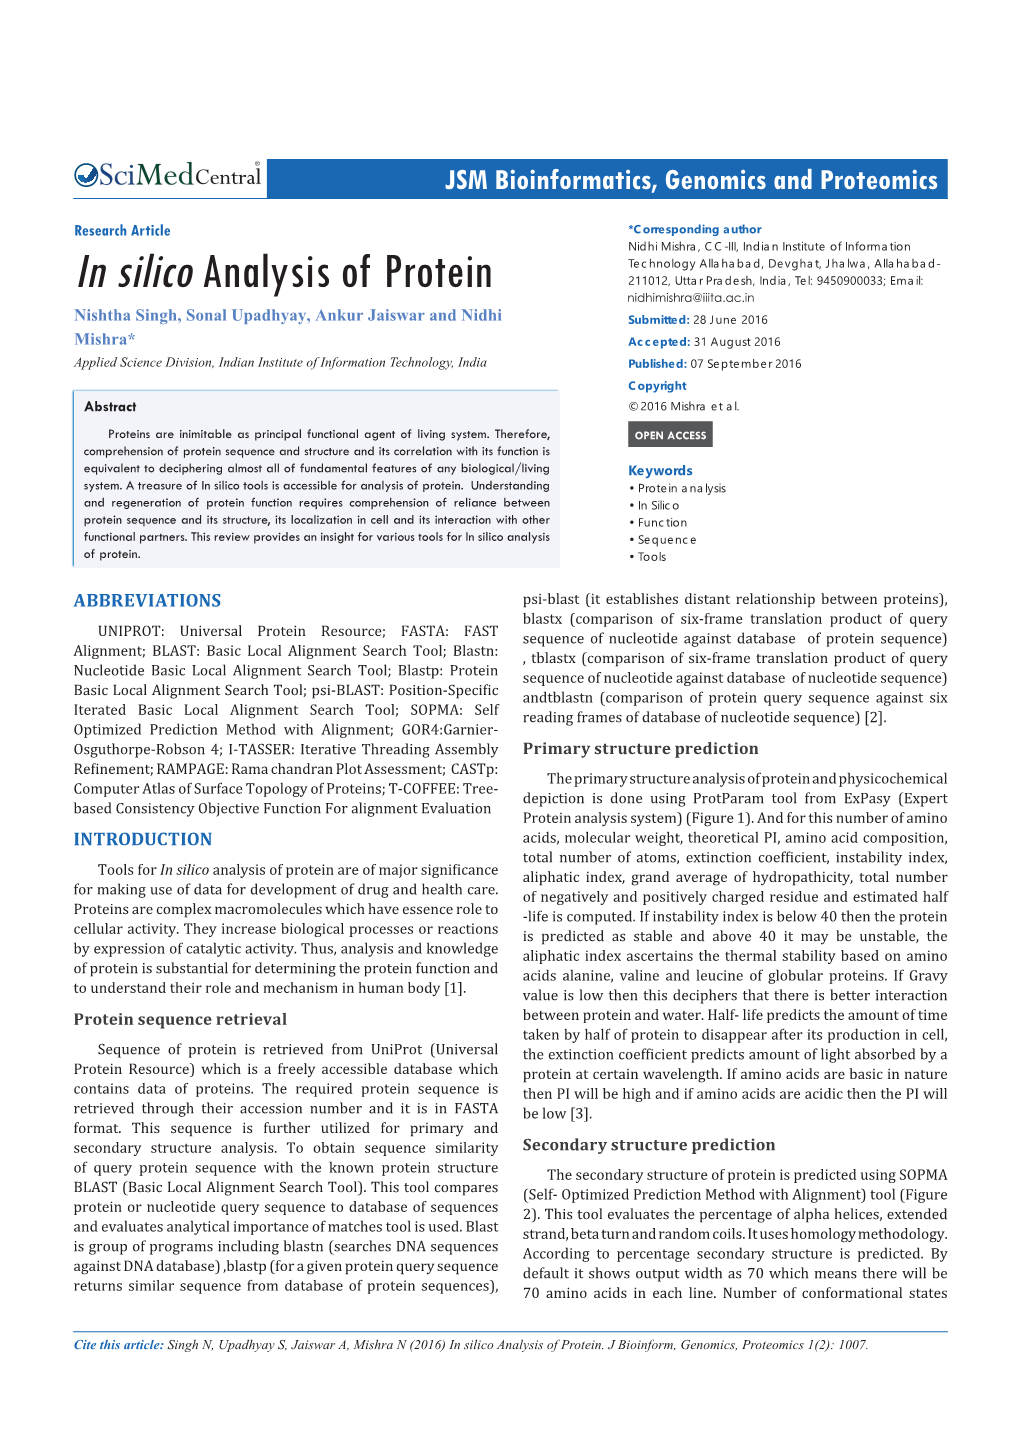 In Silico Analysis of Protein 211012, Uttar Pradesh, India, Tel: 9450900033; Email